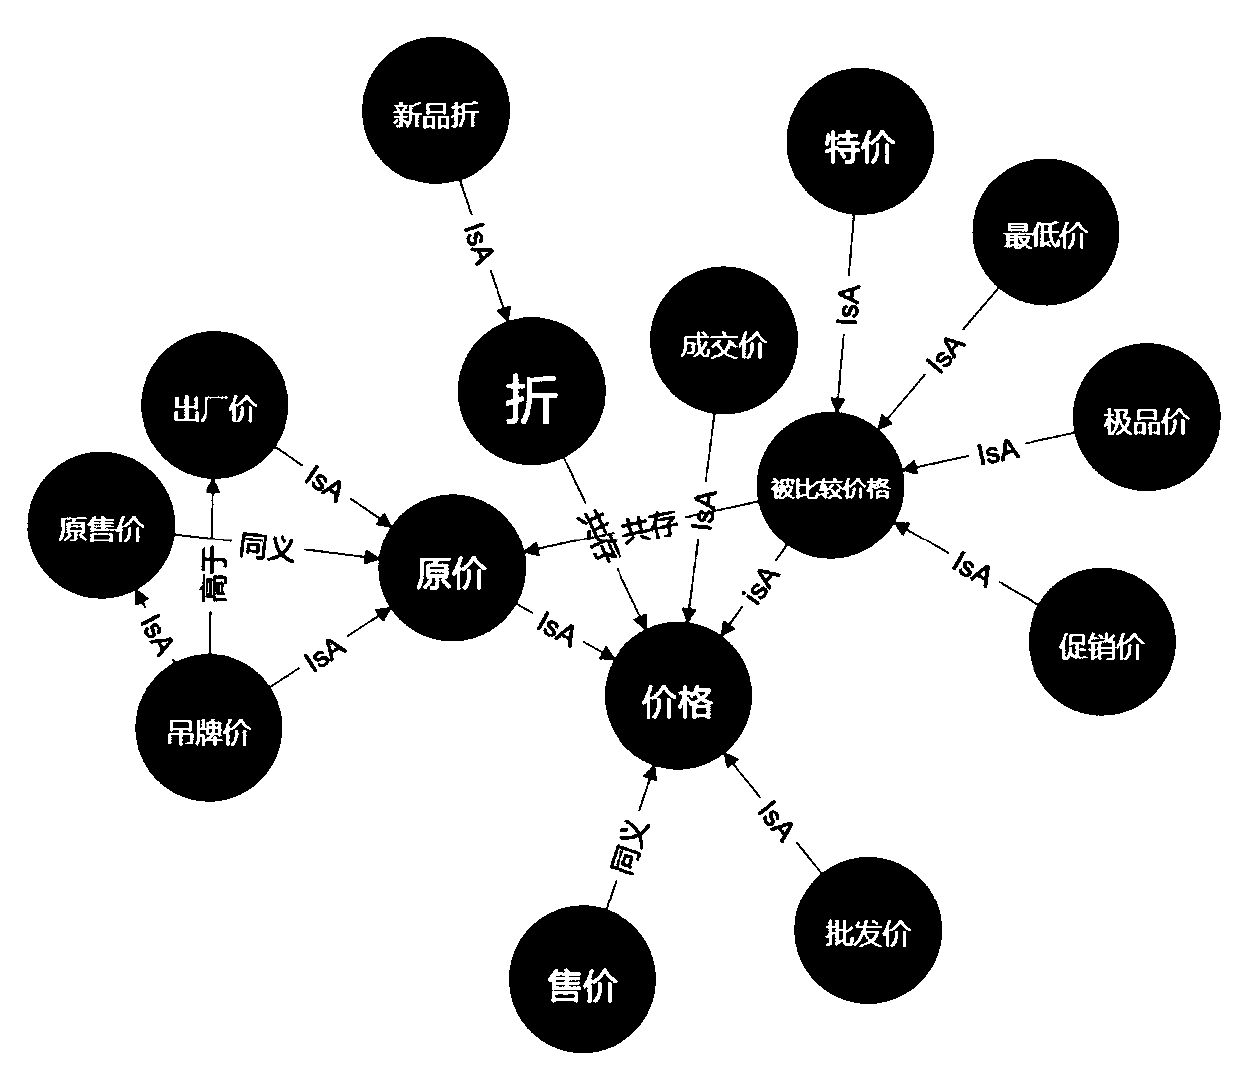 An e-commerce field oriented demand description model design method based on a knowledge graph